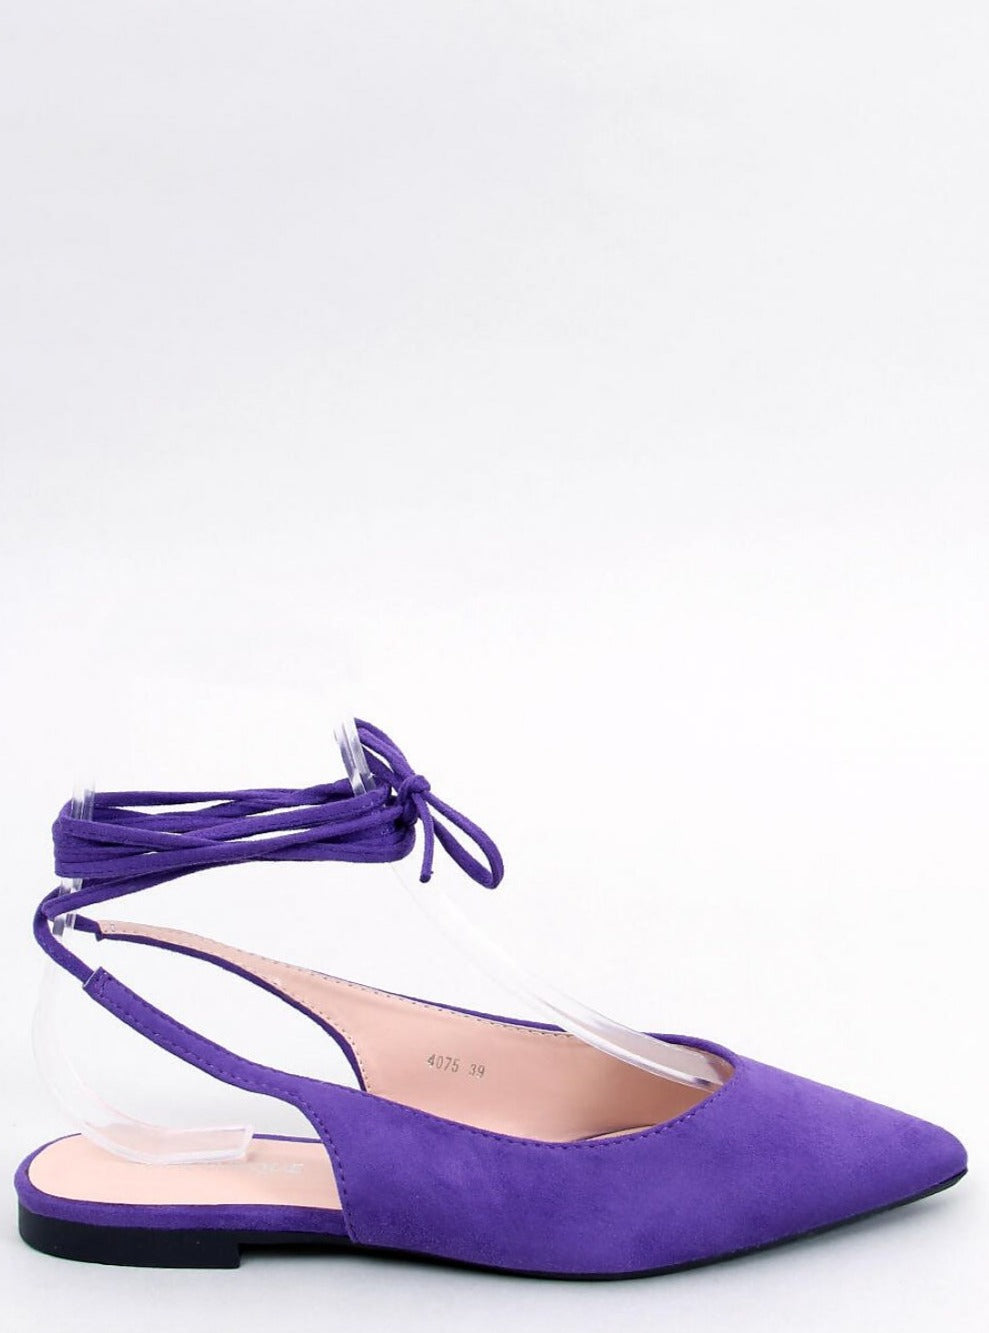 TEEK - Purple Suede Ballet Ankle Tie Flats SHOES TEEK MH 5.5  